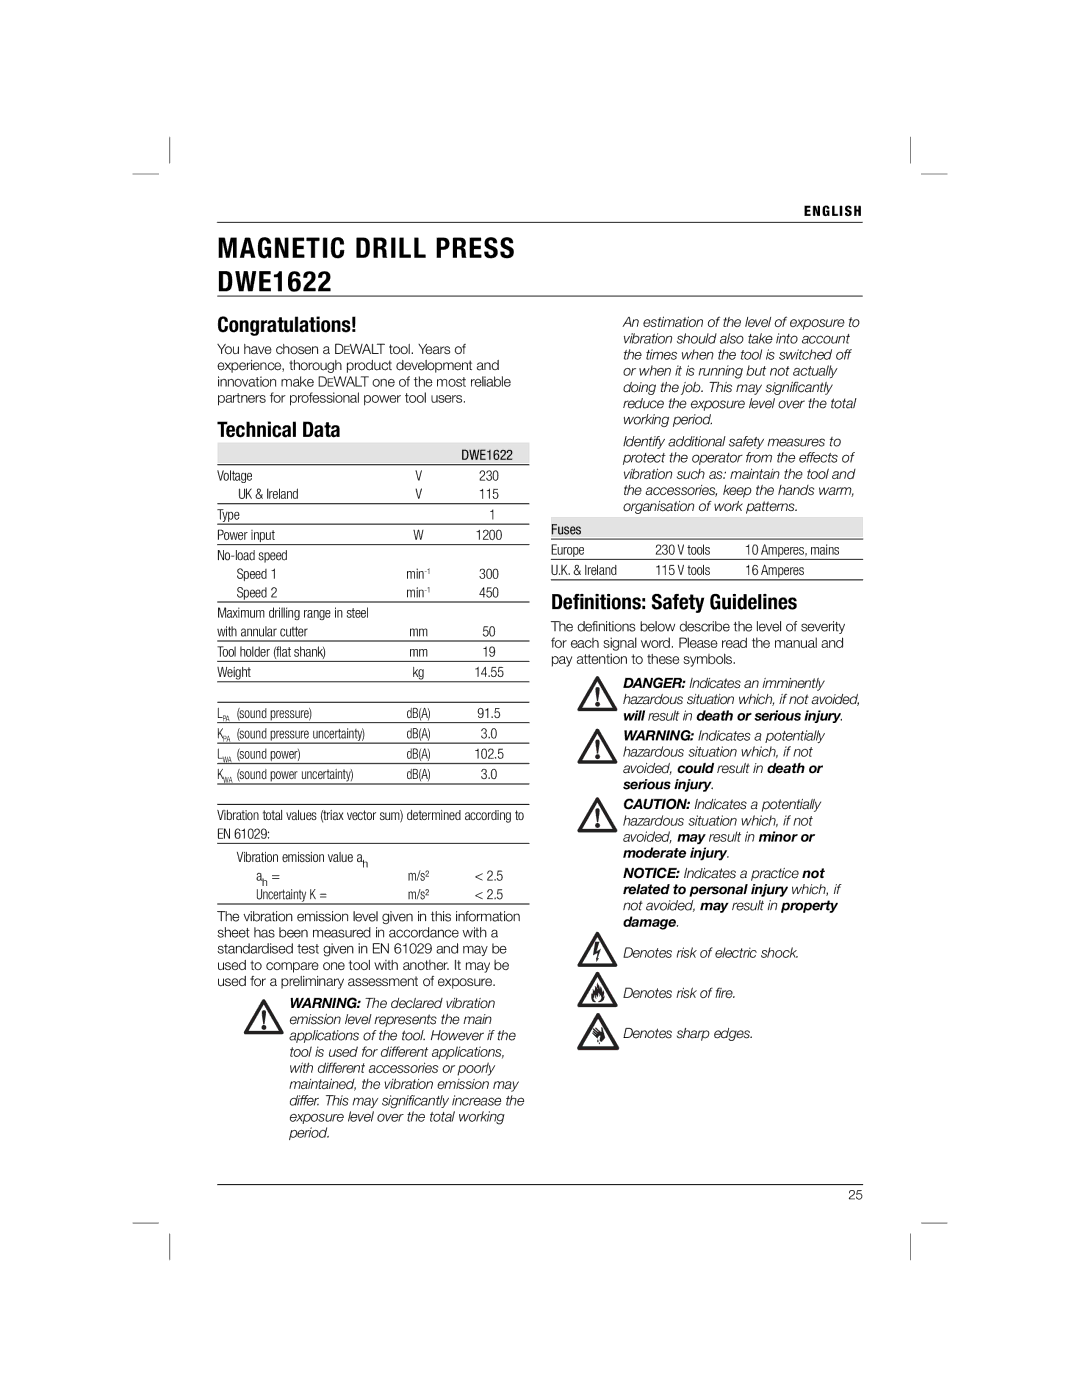 DeWalt DWE1622K manual Congratulations, Technical Data, Deﬁnitions Safety Guidelines, English 